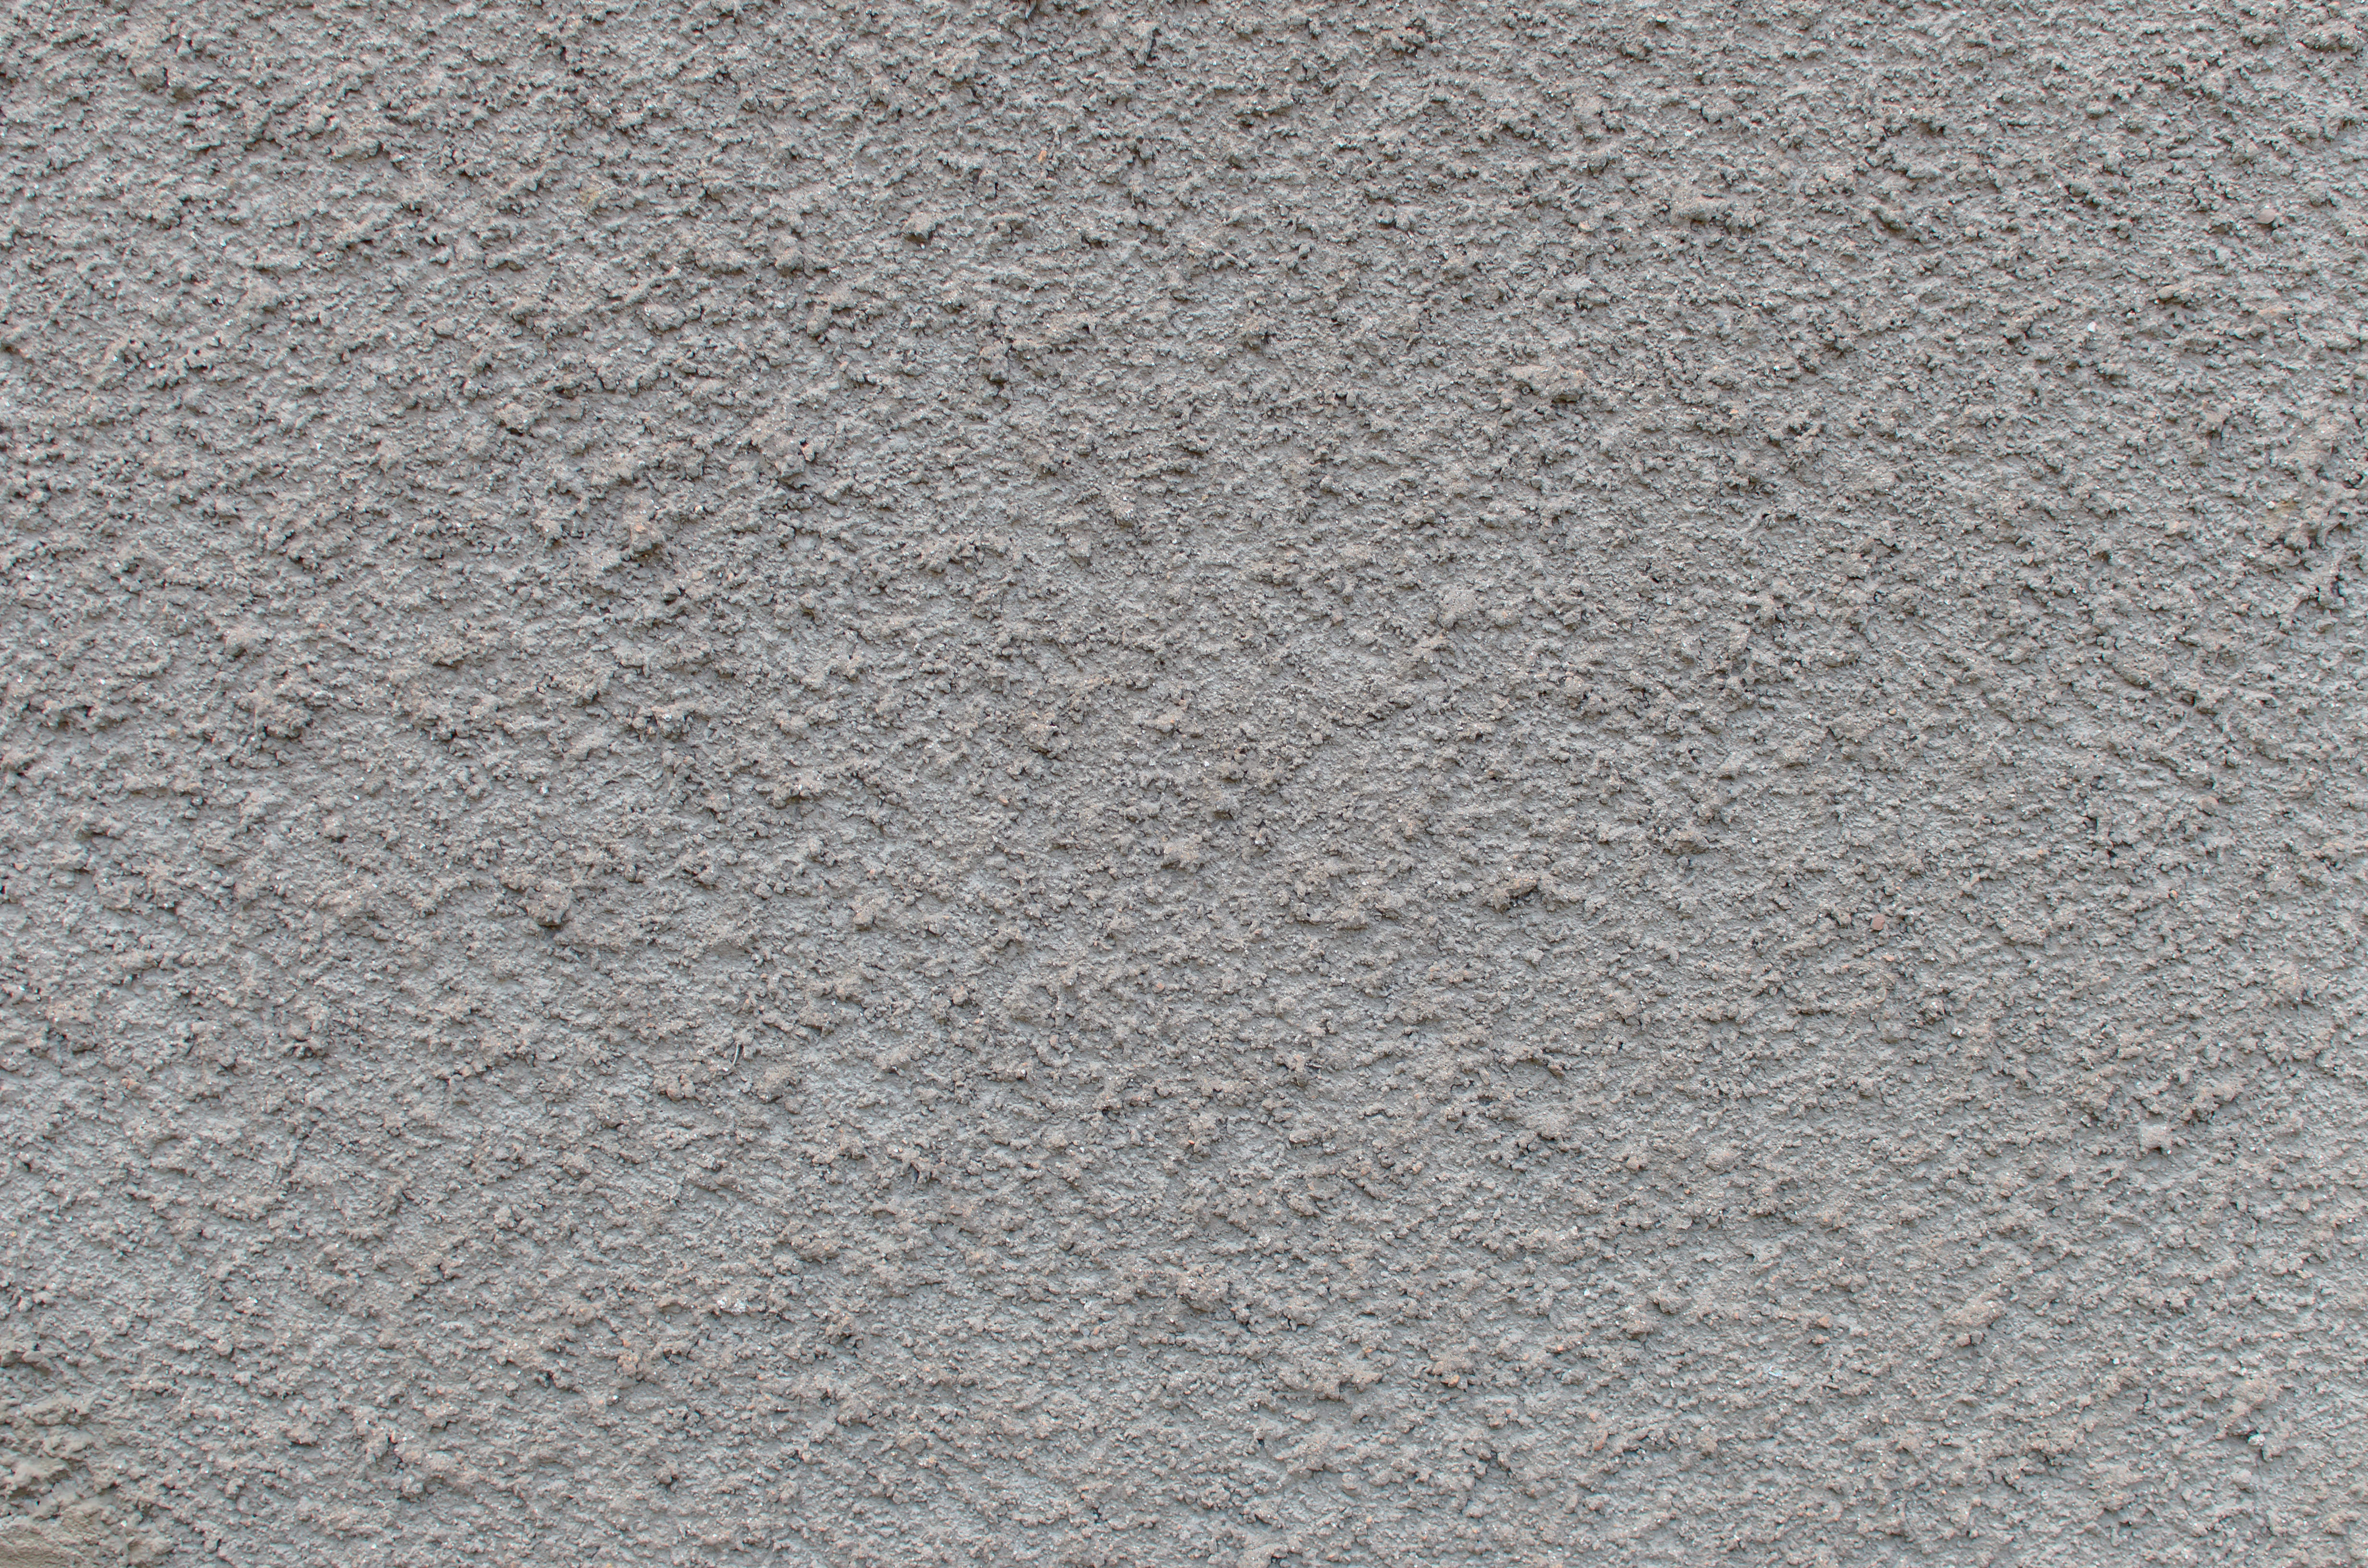 Concrete - Tiny rocks in light gray concrete wall - Texture ...